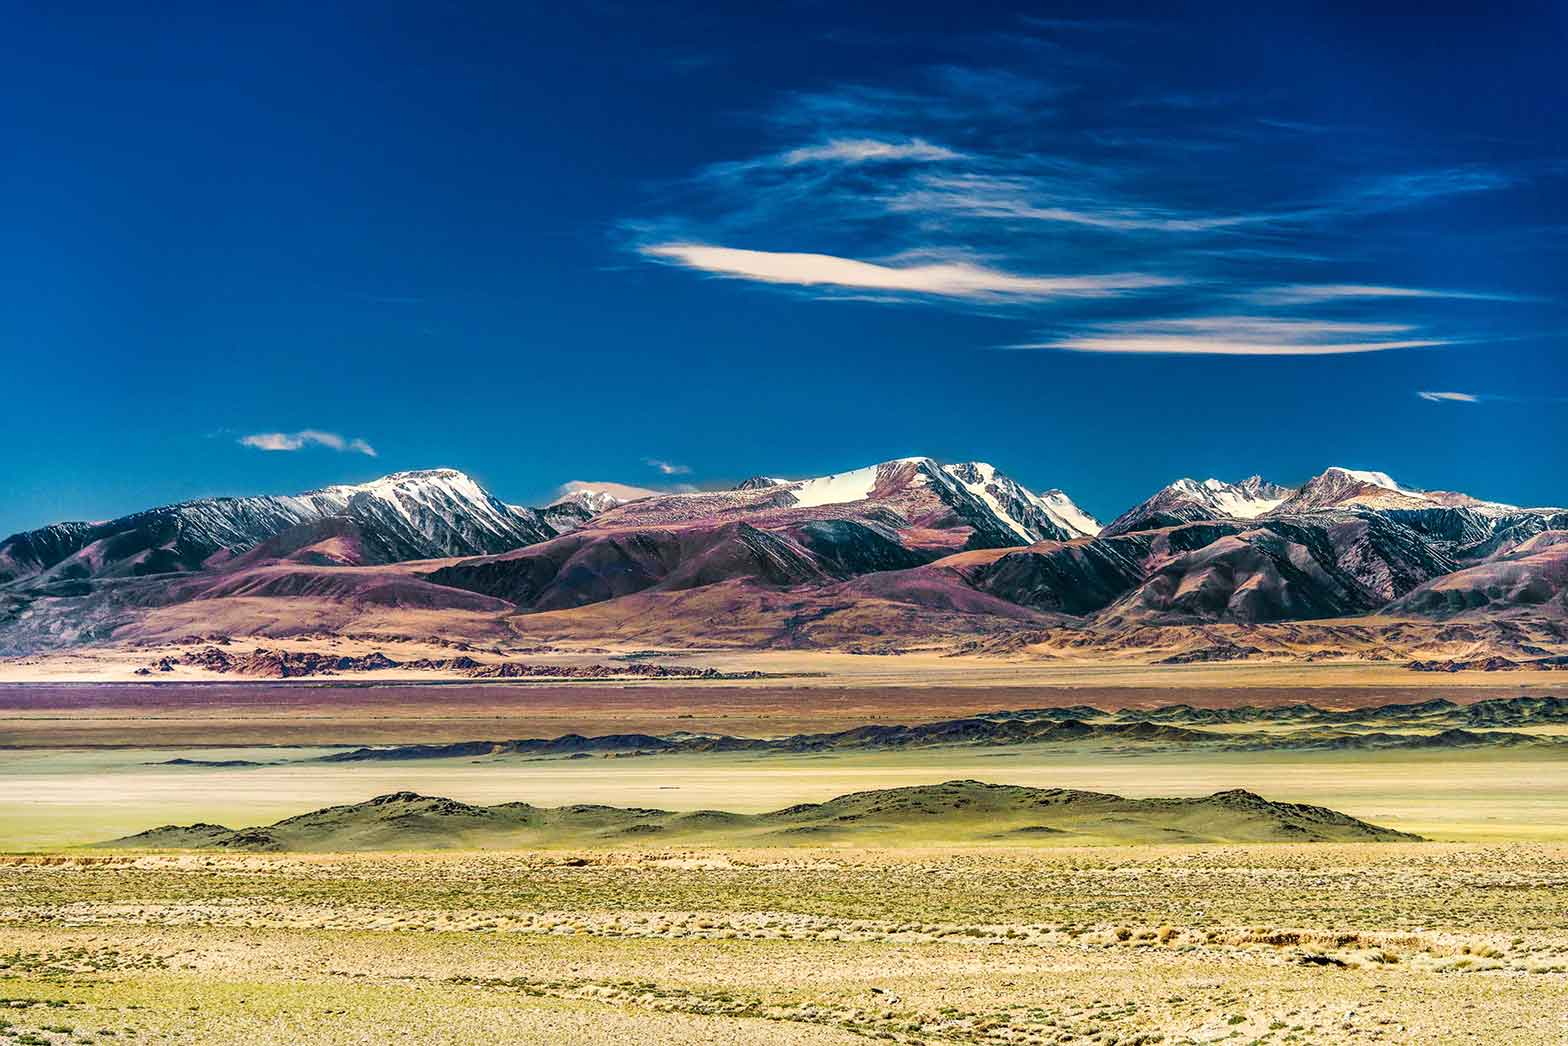 Northwestern Mongolia